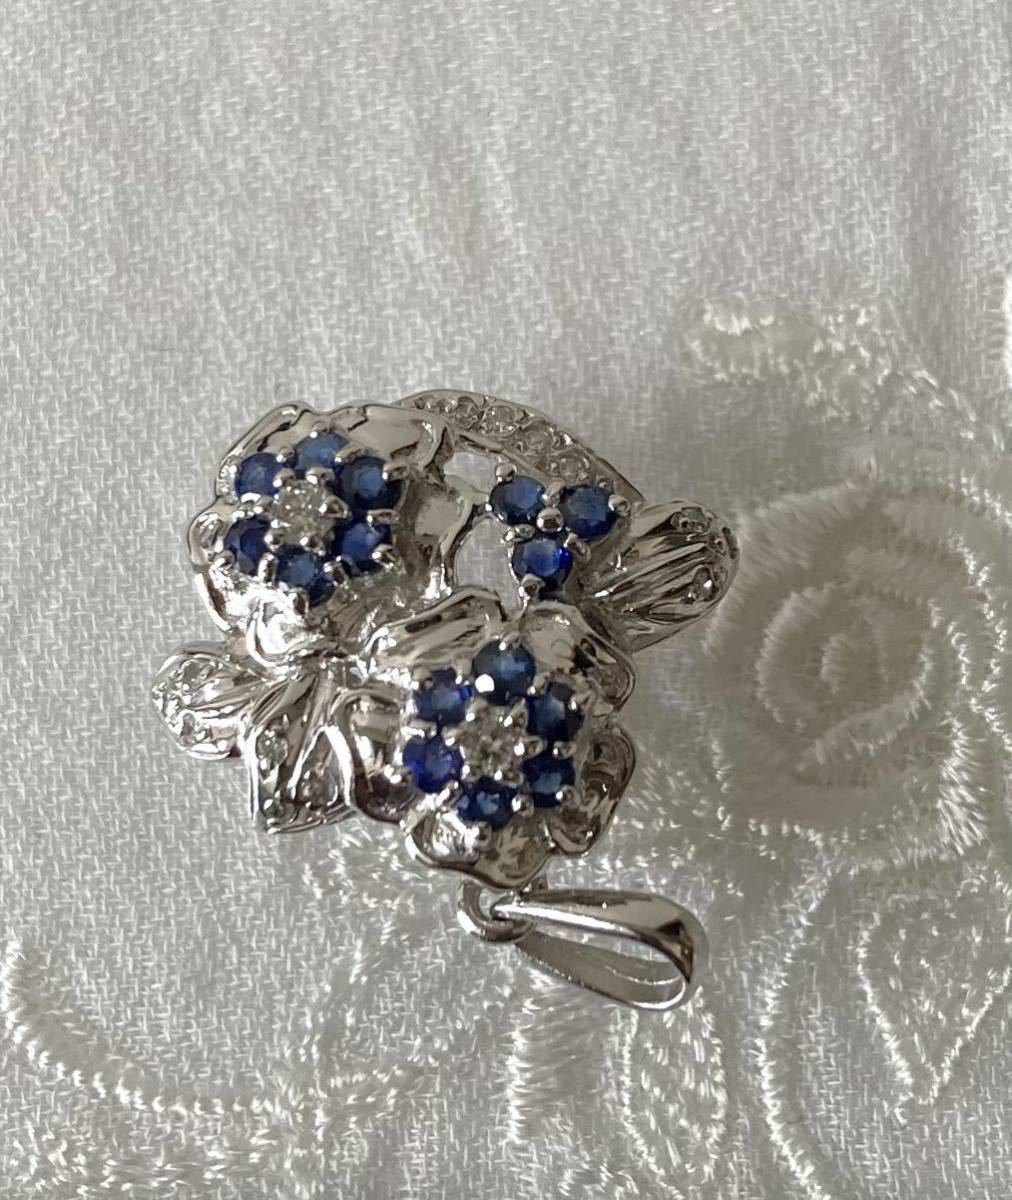  platinum Pt900 diamond sapphire pendant top accessory flower jewelry necklace flower motif 